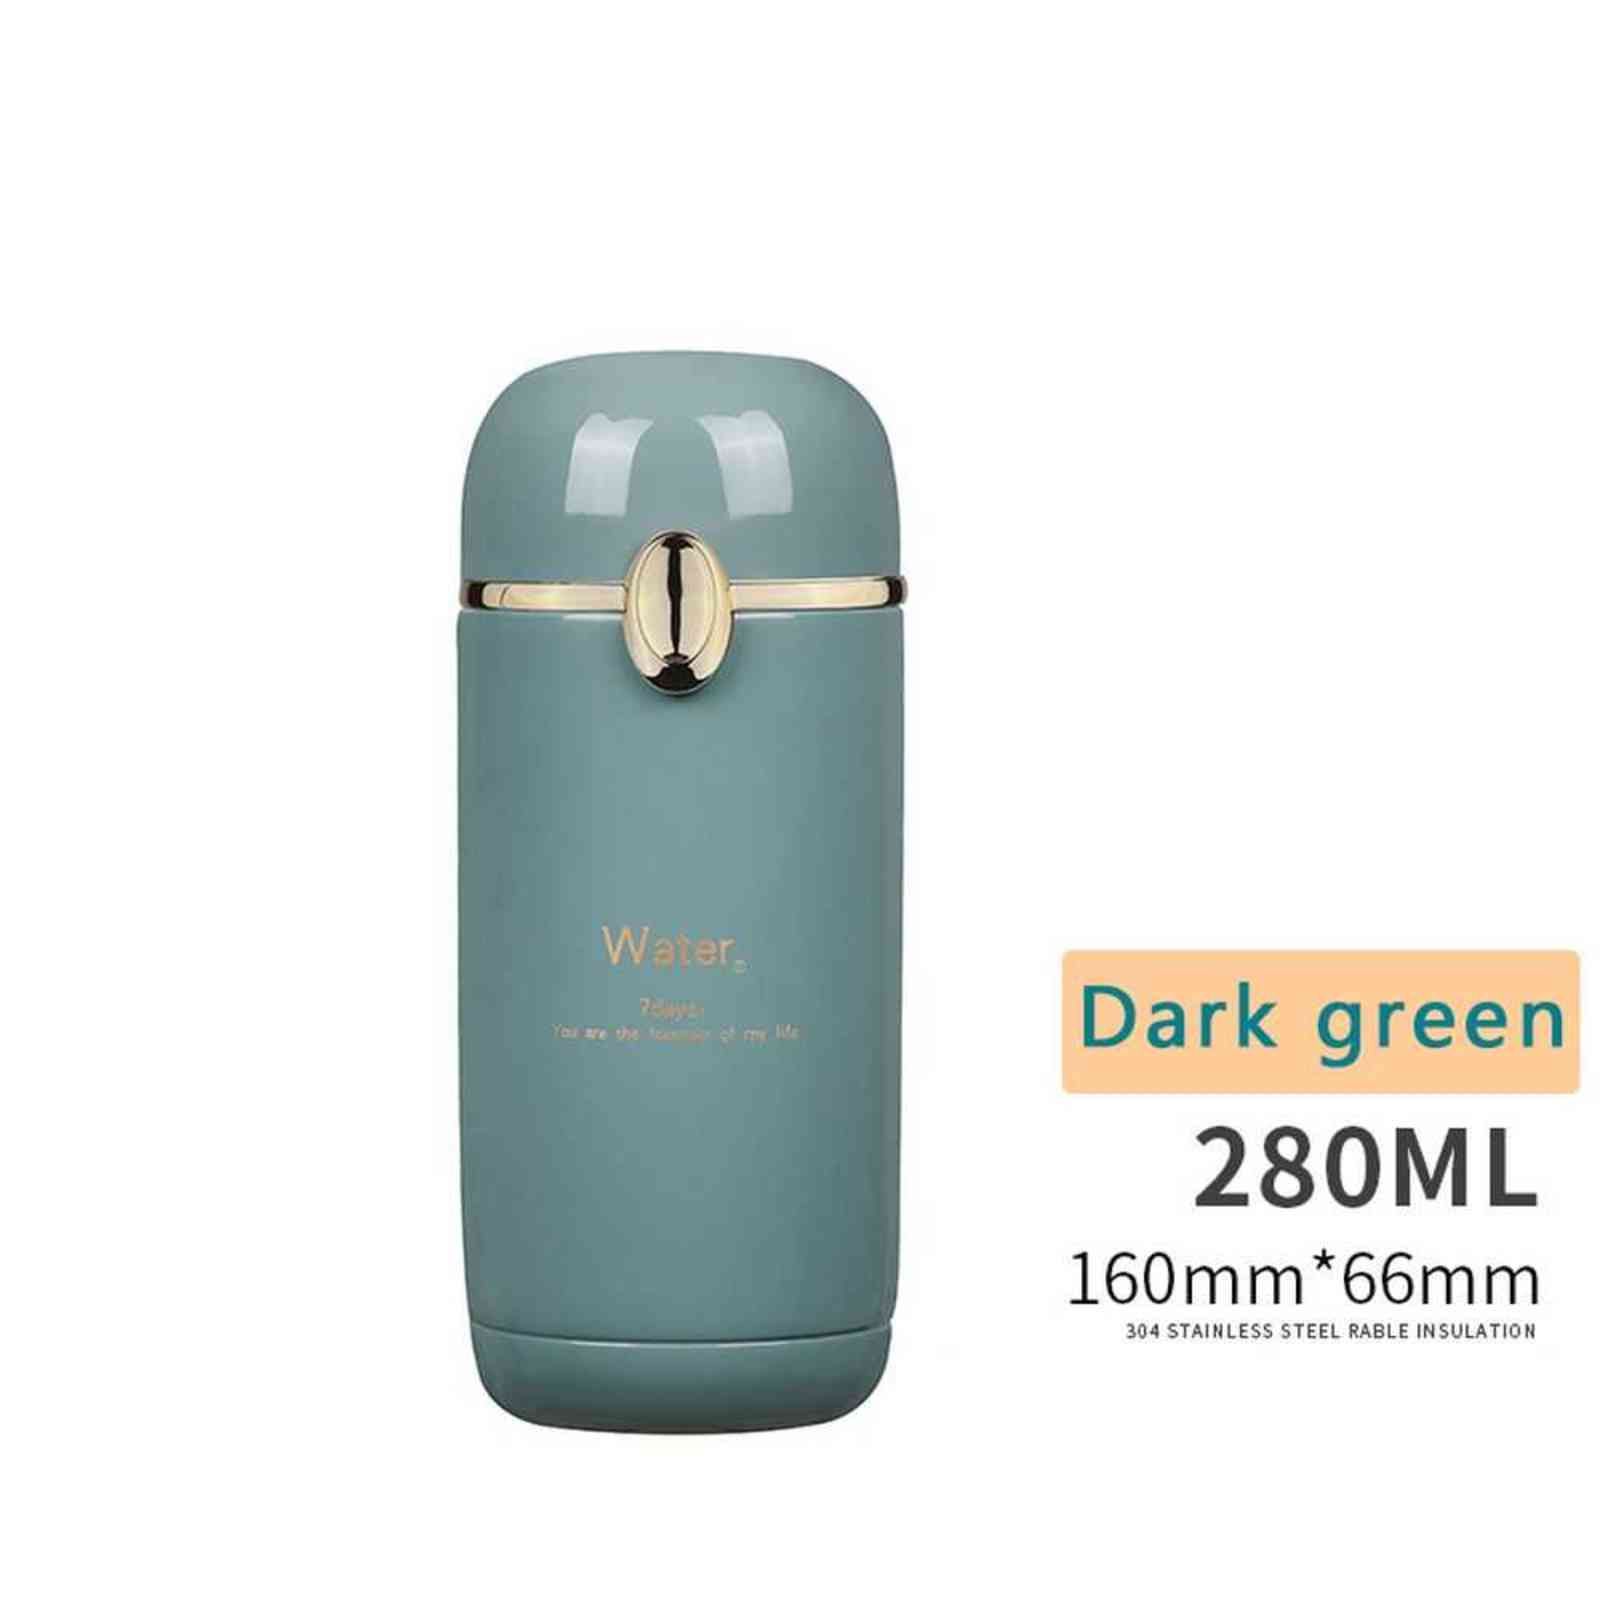 Dark Green-280ml